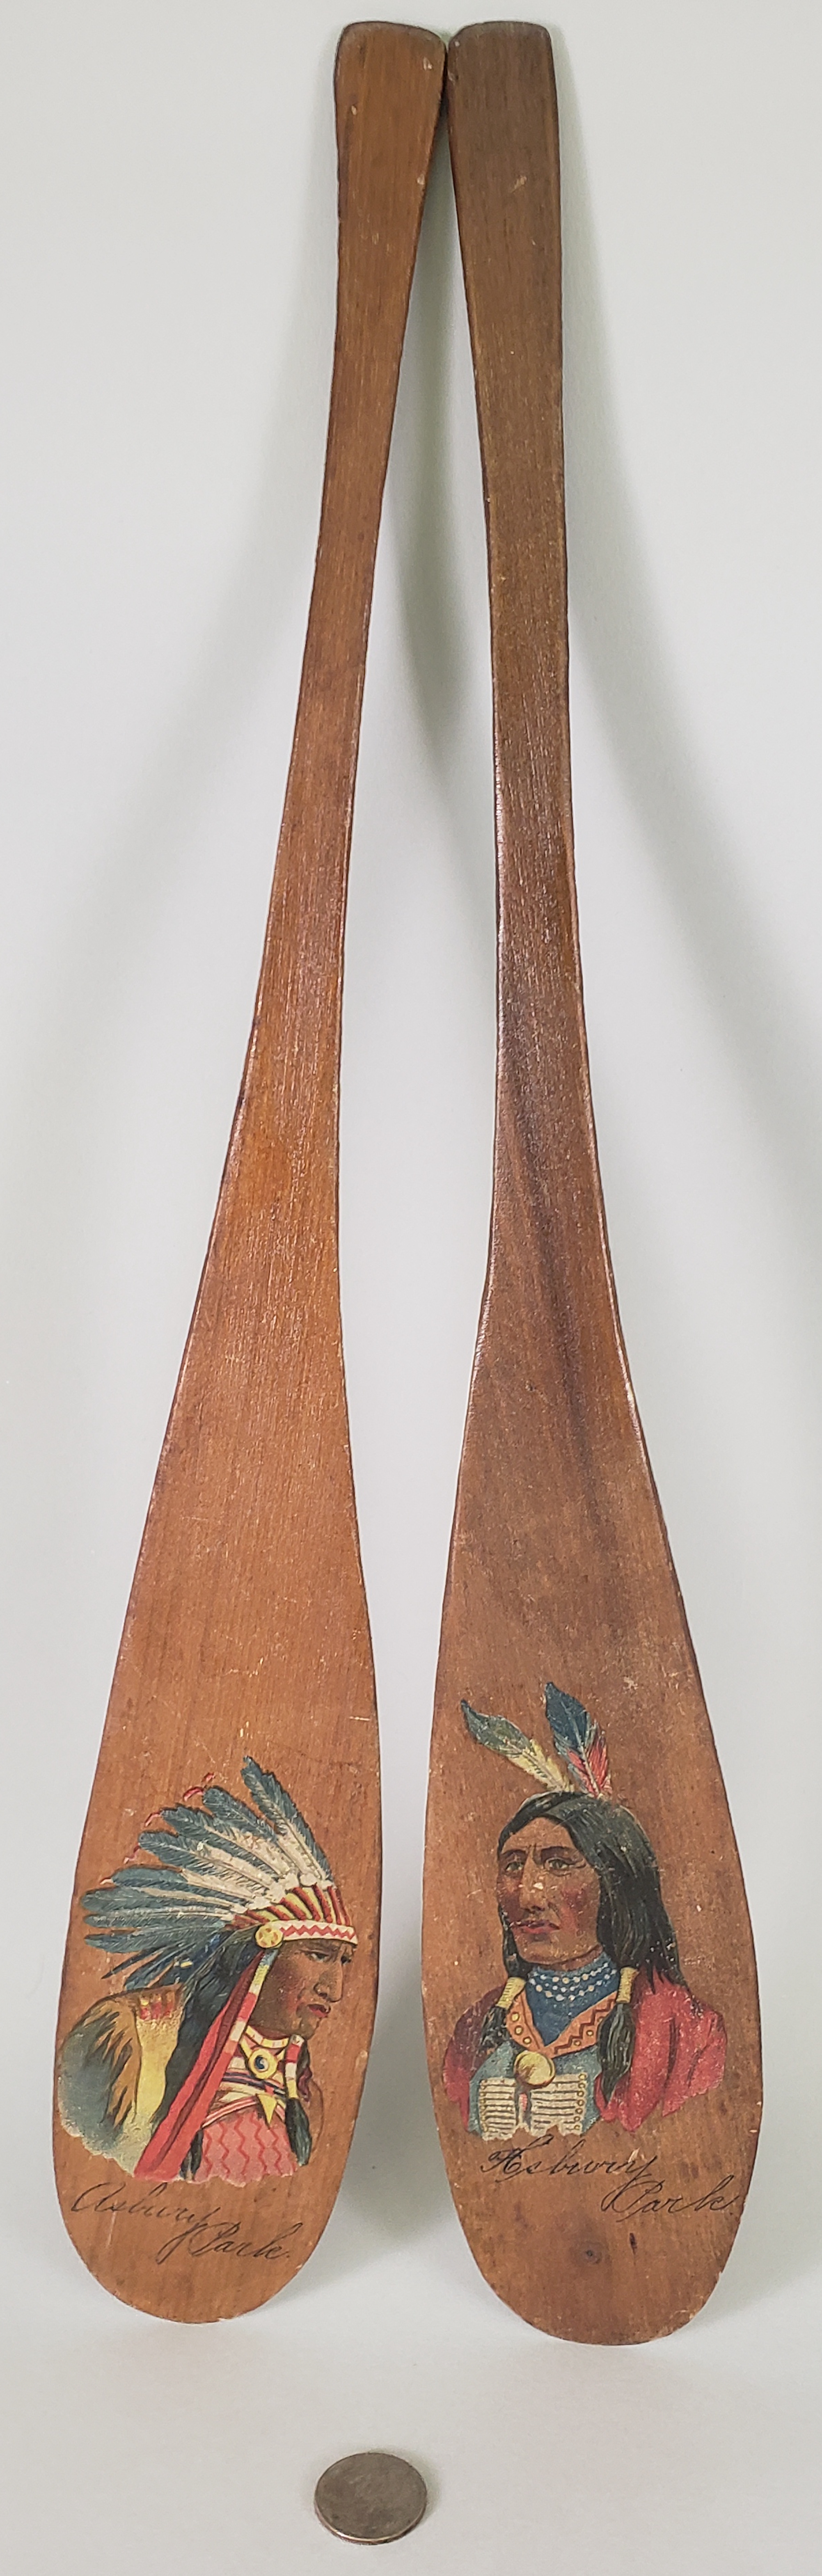 Pair of Vintage Carved Souvenir Adirondack Miniature Canoe Paddles, circa 1930s